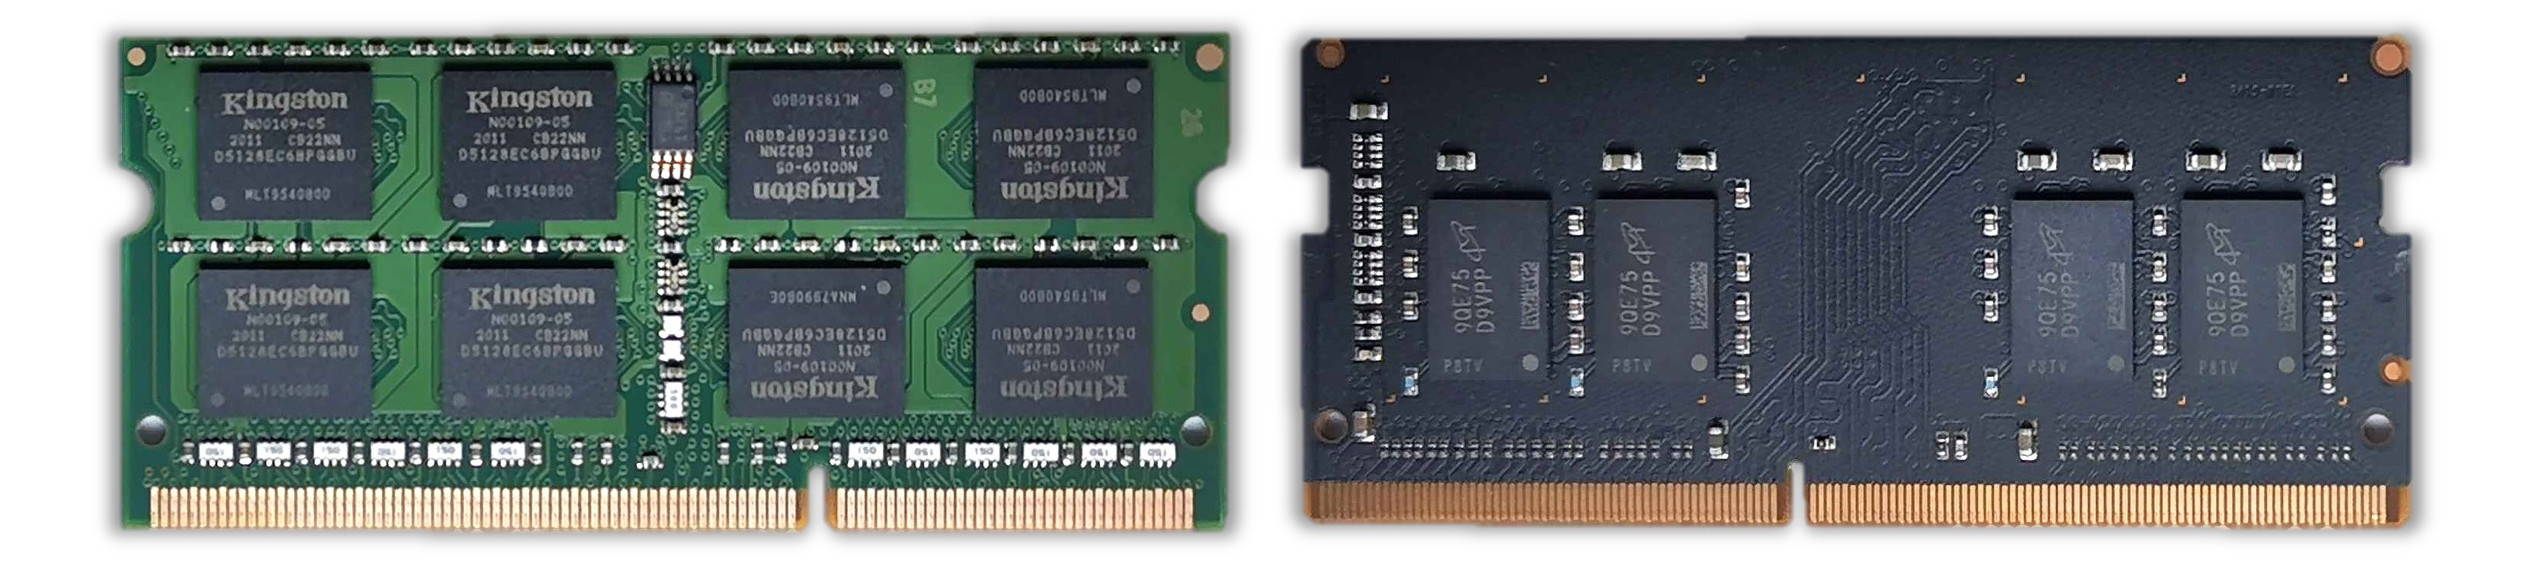 DDR3 and DDR4 SODIMM